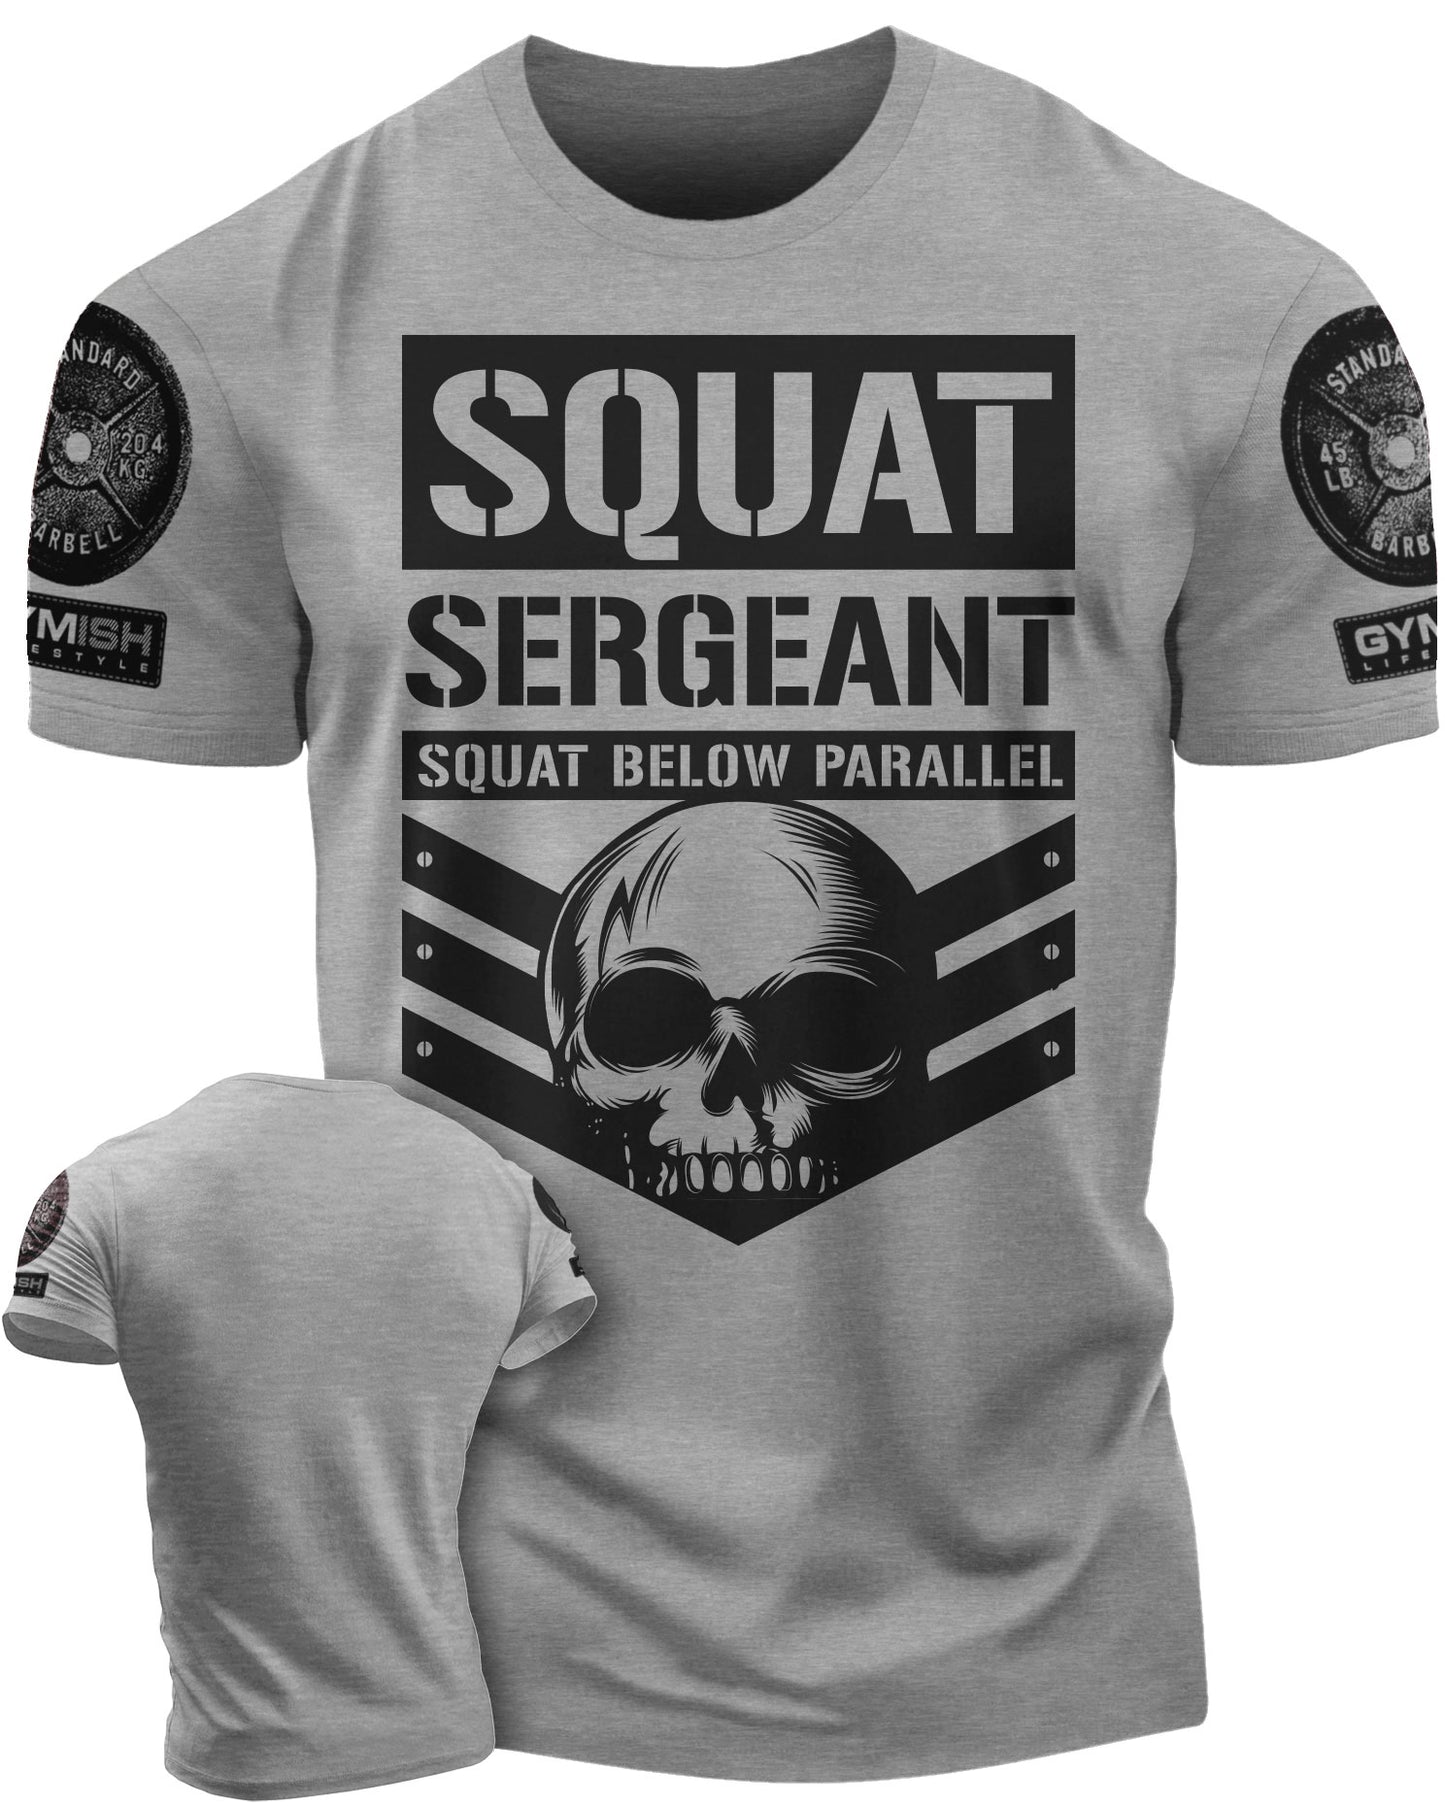 064. Squat Sergeant Workout T-Shirt